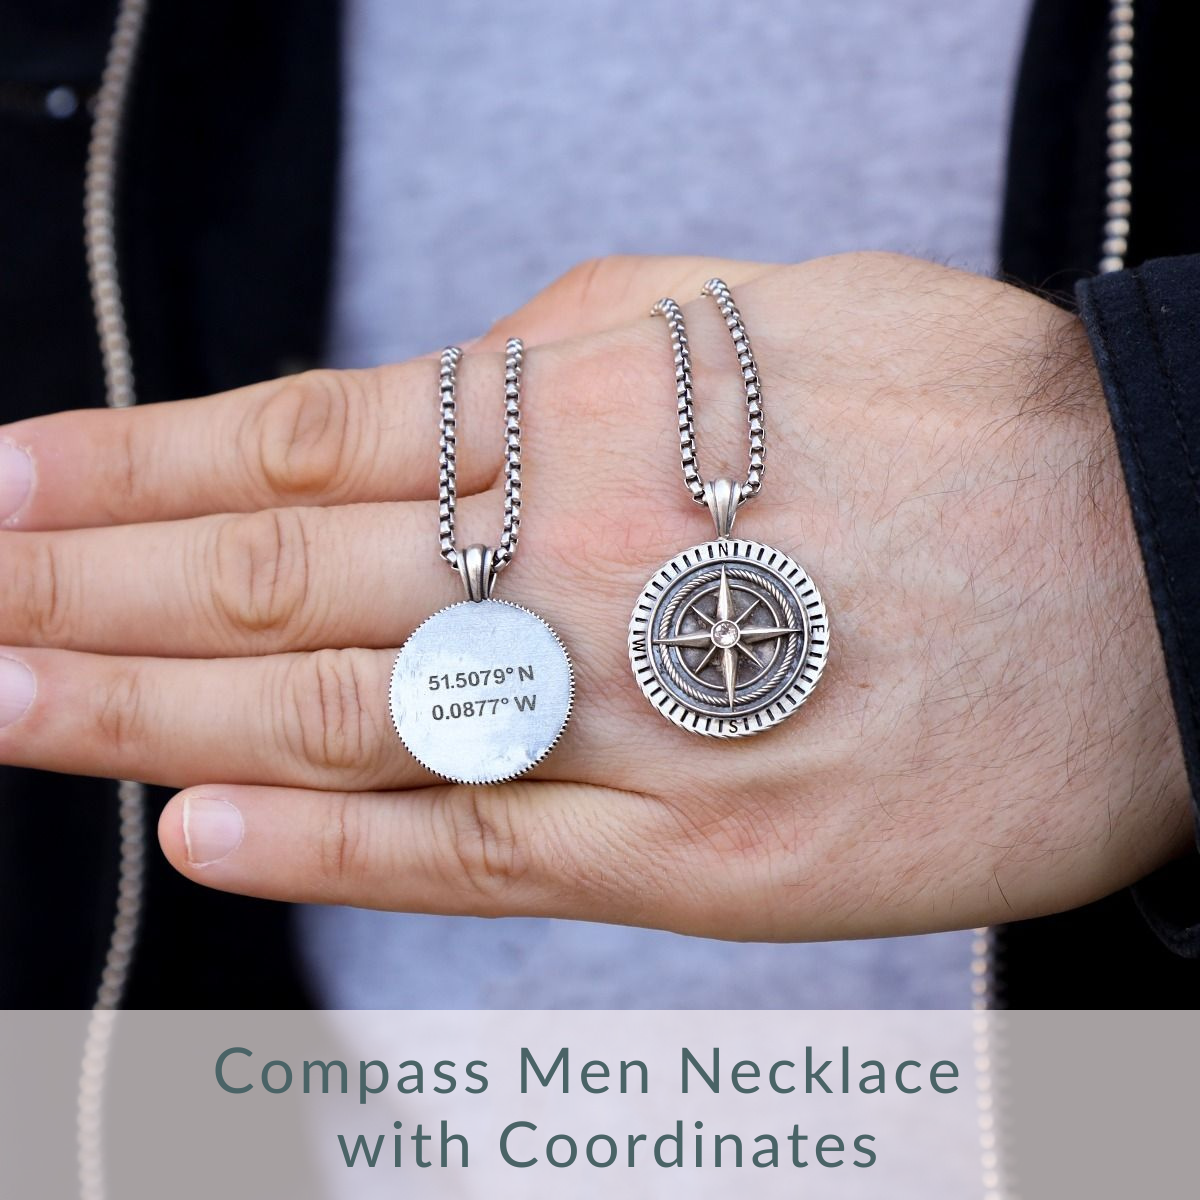 Compas Necklace with Coordinates for Men